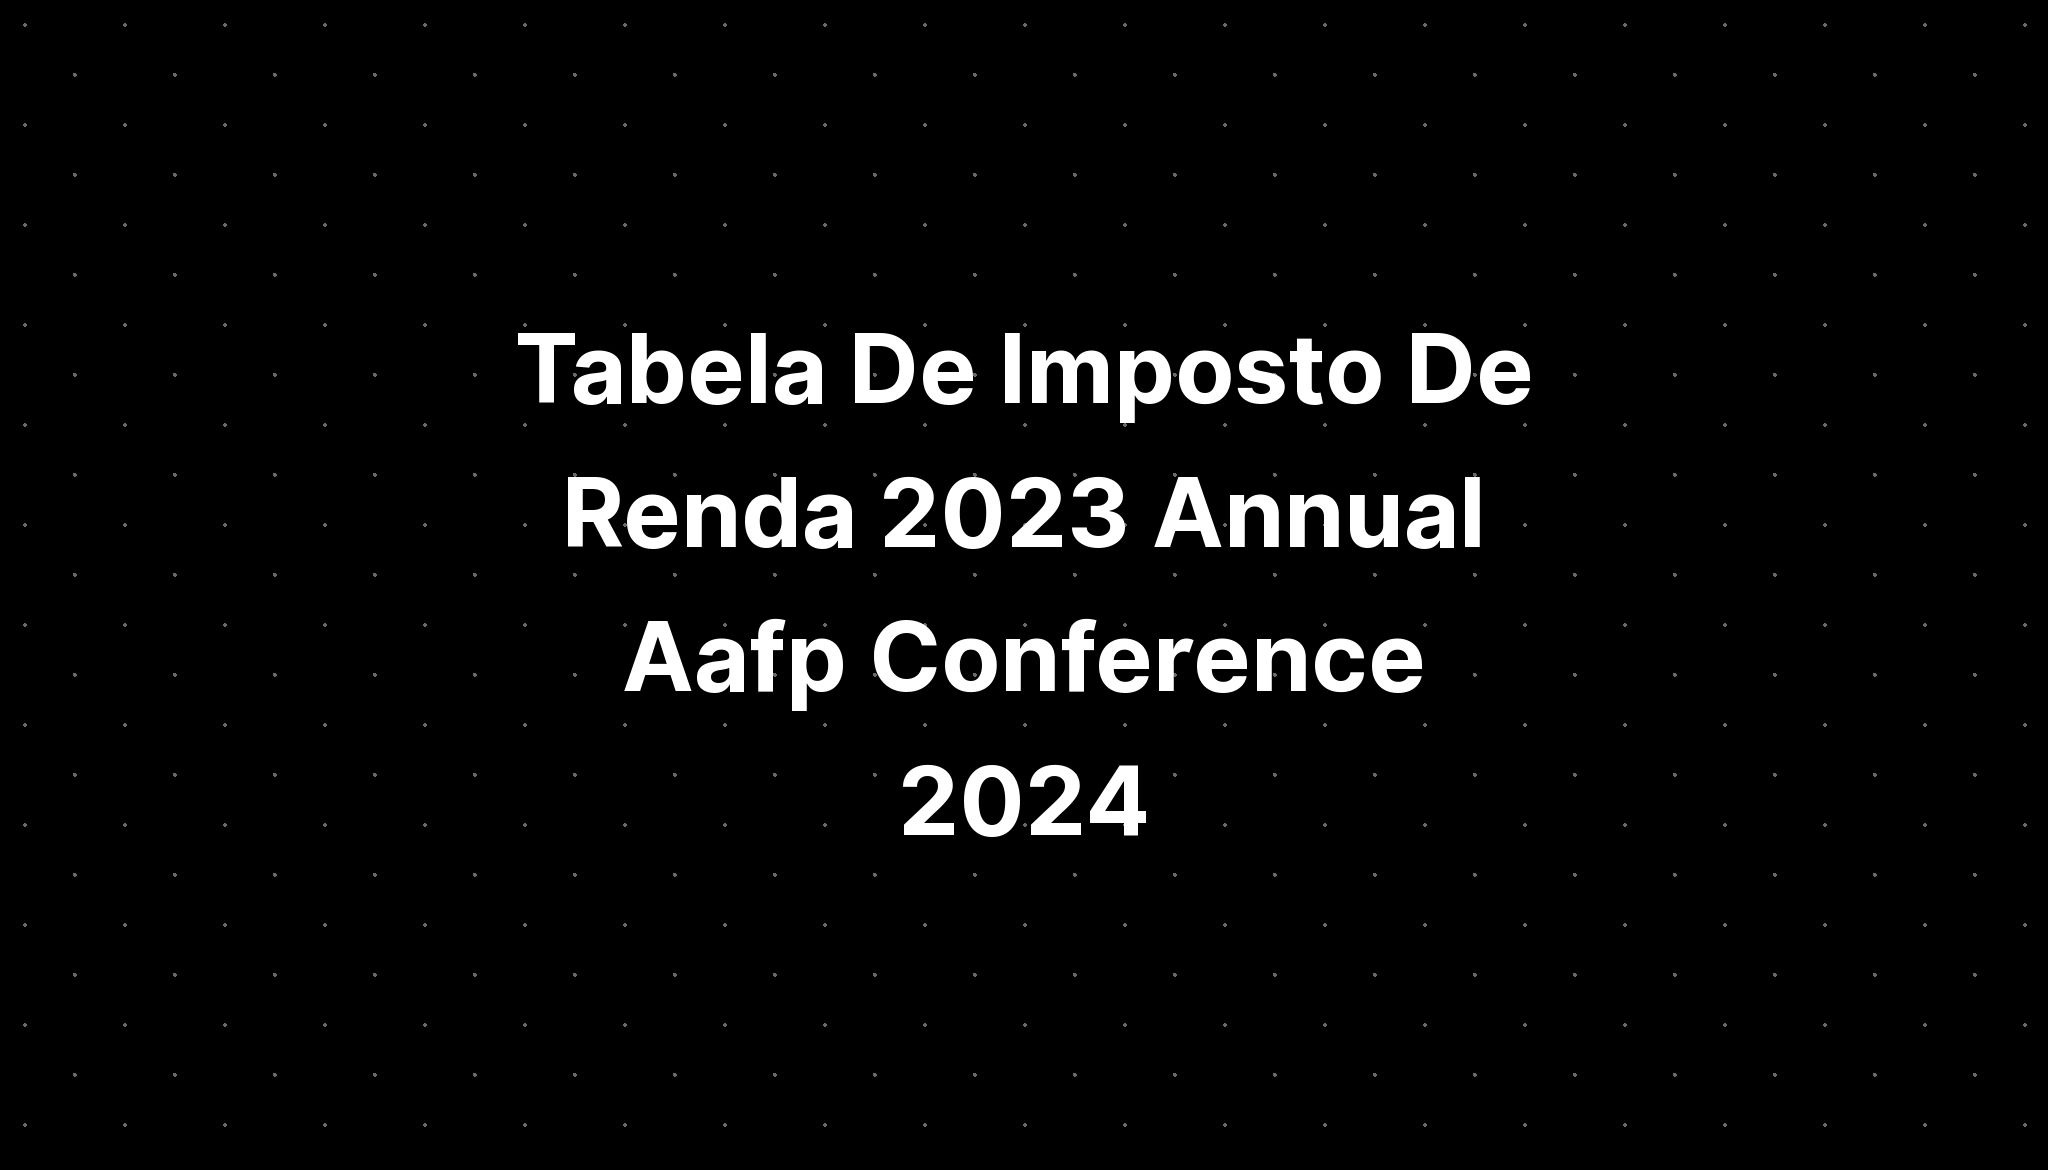 Tabela De Imposto De Renda 2023 Annual Aafp Conference 2024 IMAGESEE